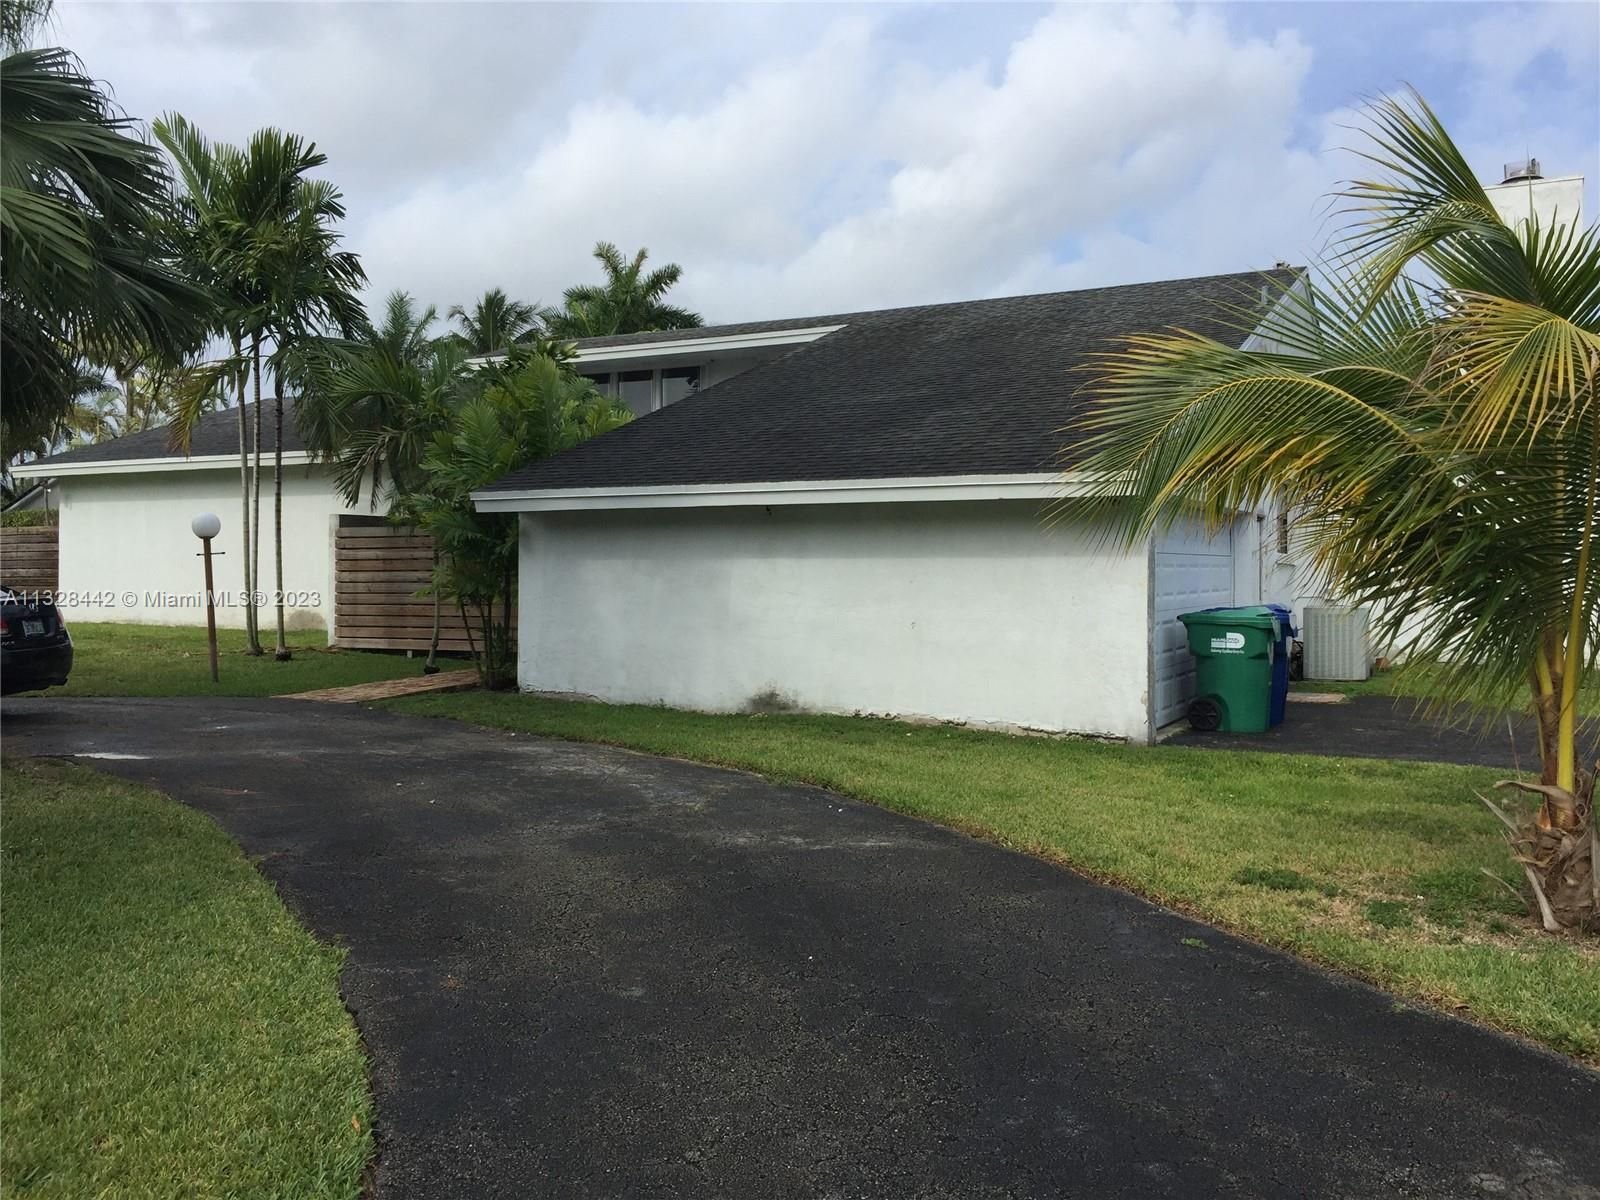 Real estate property located at 17740 75th Ave, Miami-Dade County, Palmetto Bay, FL